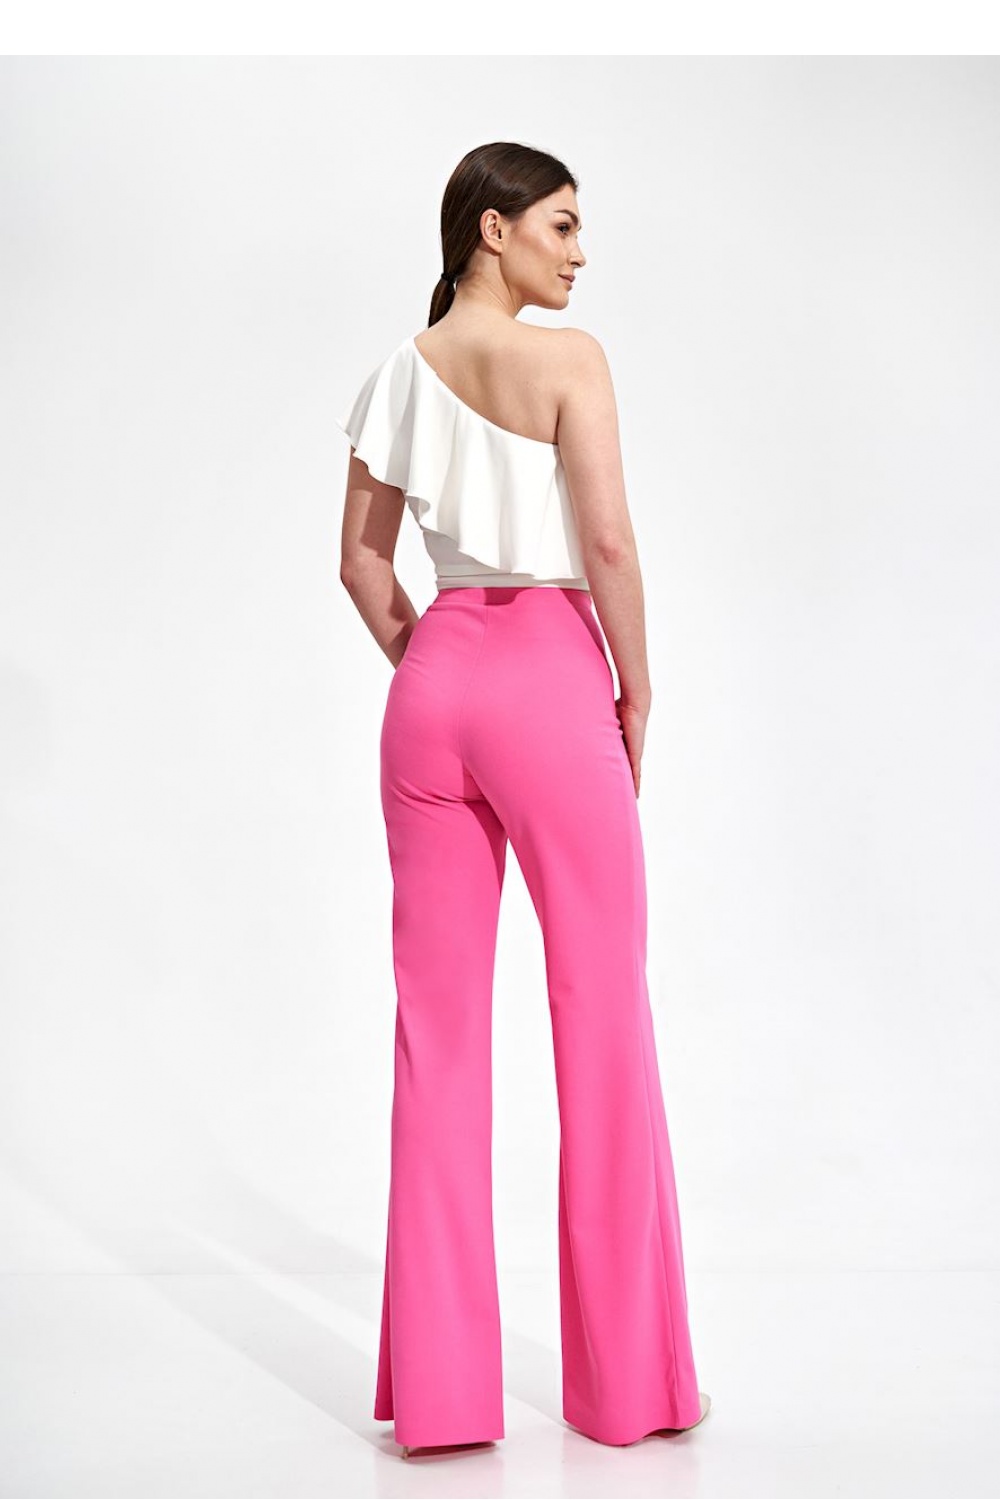 Women trousers model 167808 Figl pink Ladies